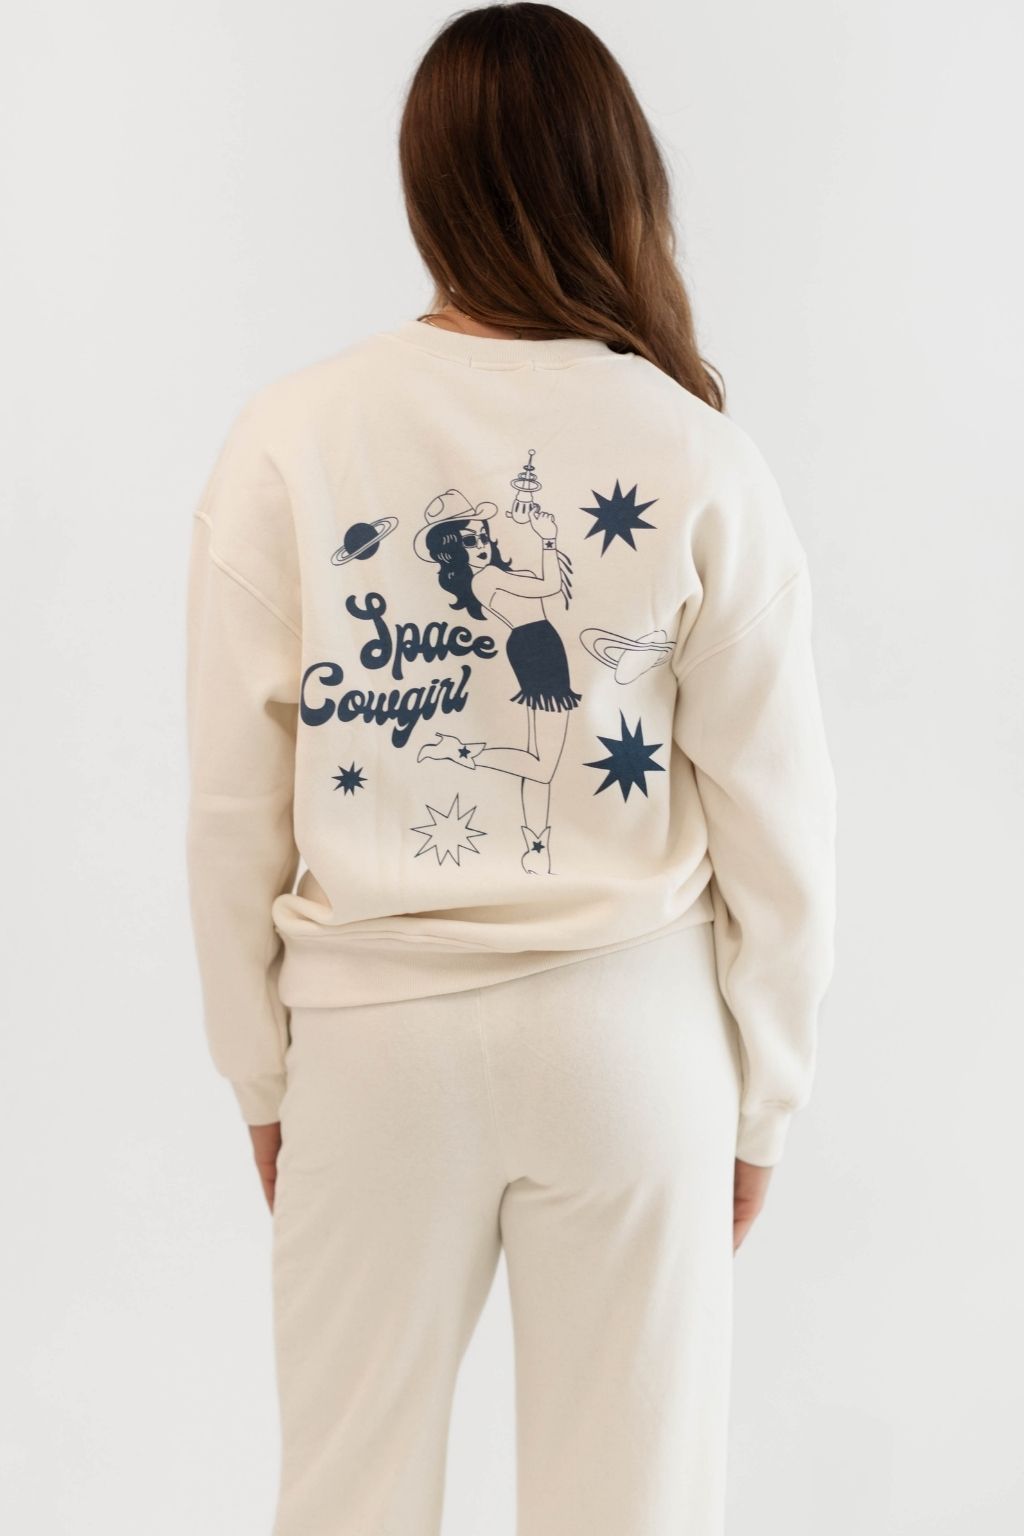 Space Cowgirl Sweatshirt